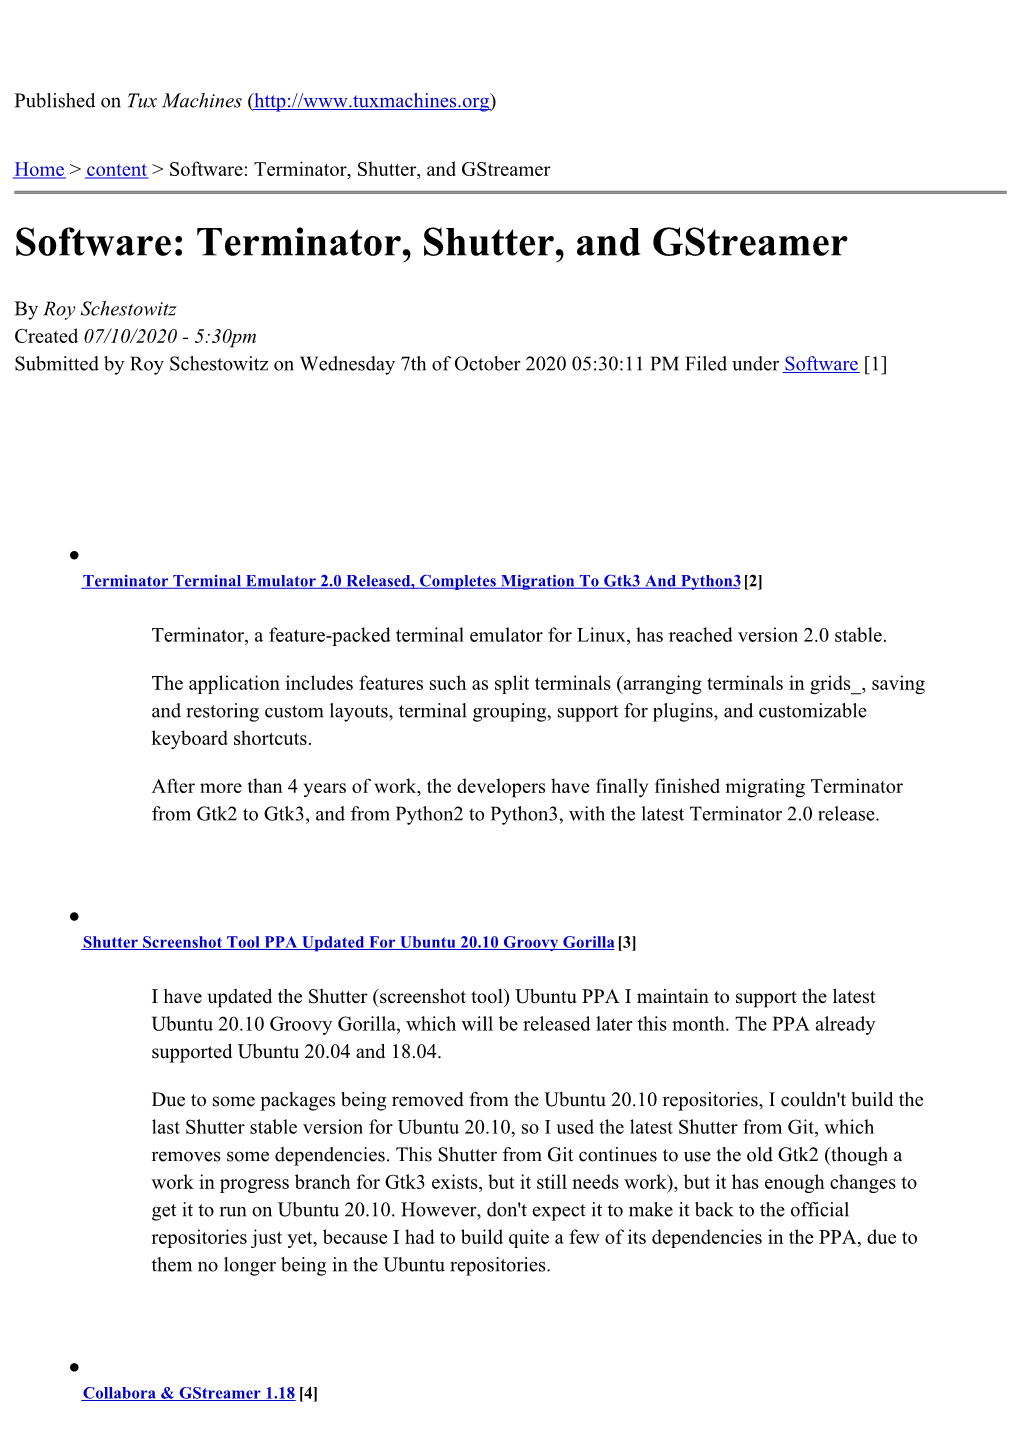 Software: Terminator, Shutter, and Gstreamer